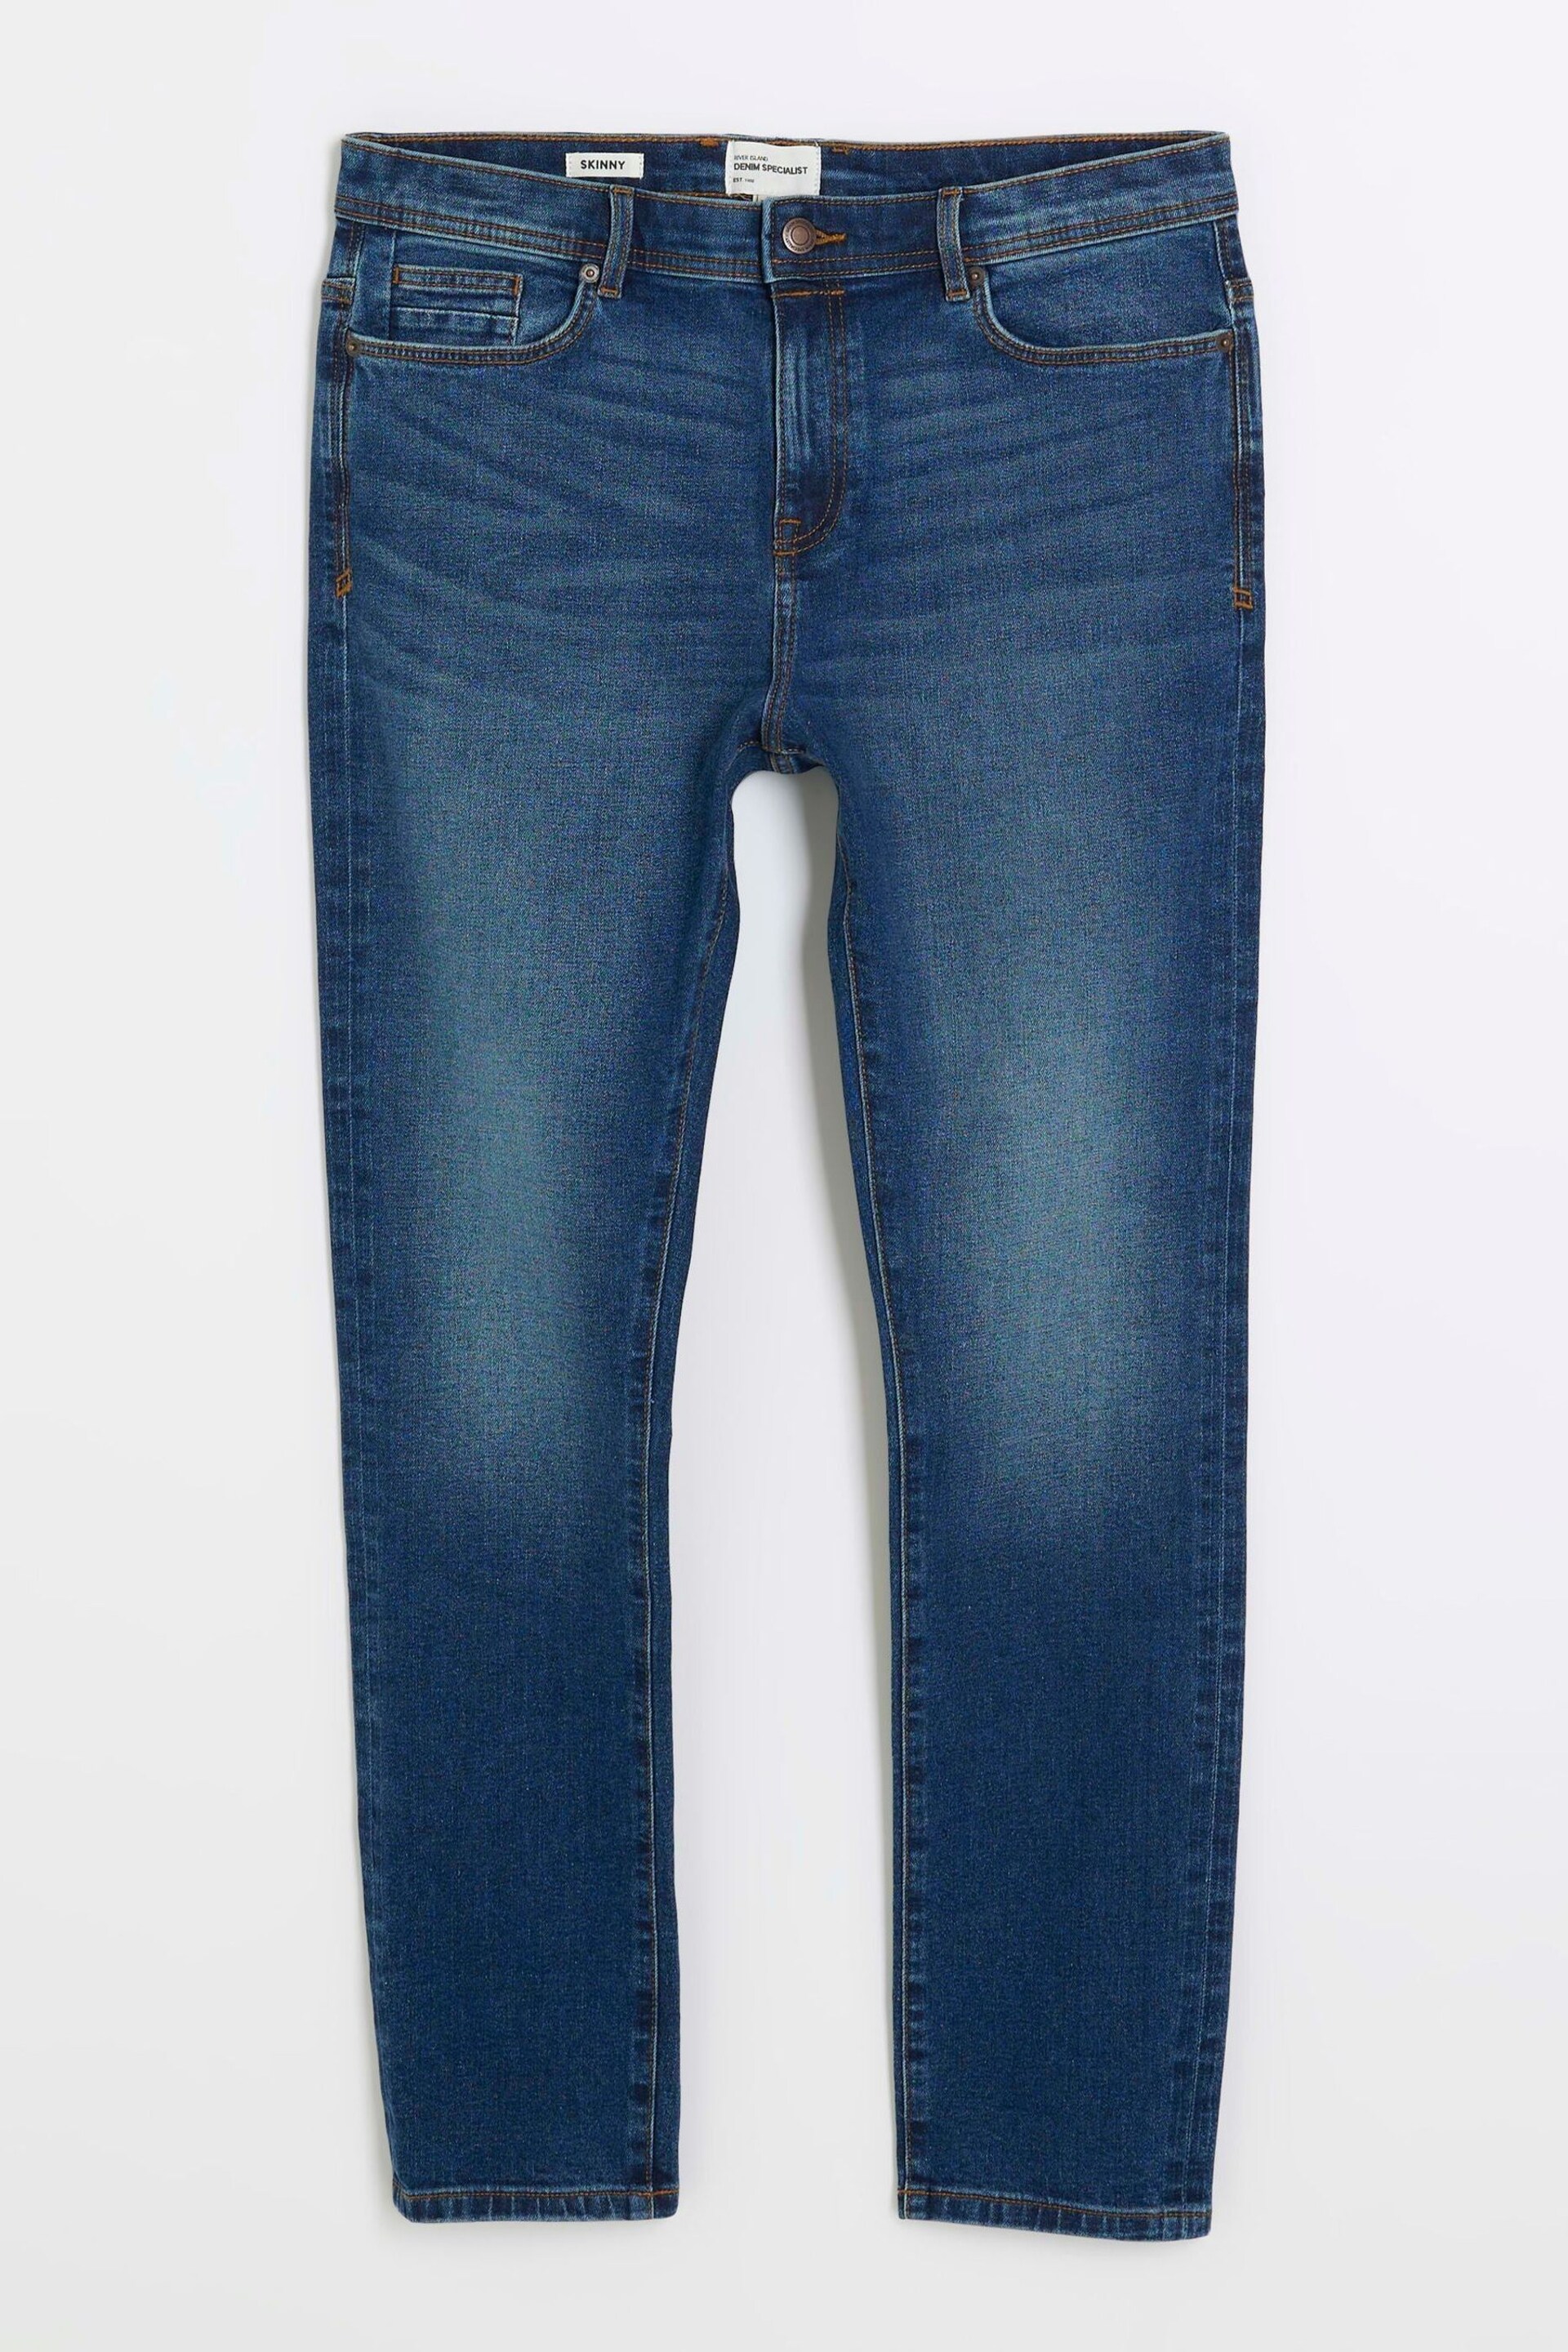 River Island Blue Medium Wash Skinny Jeans - Image 5 of 6